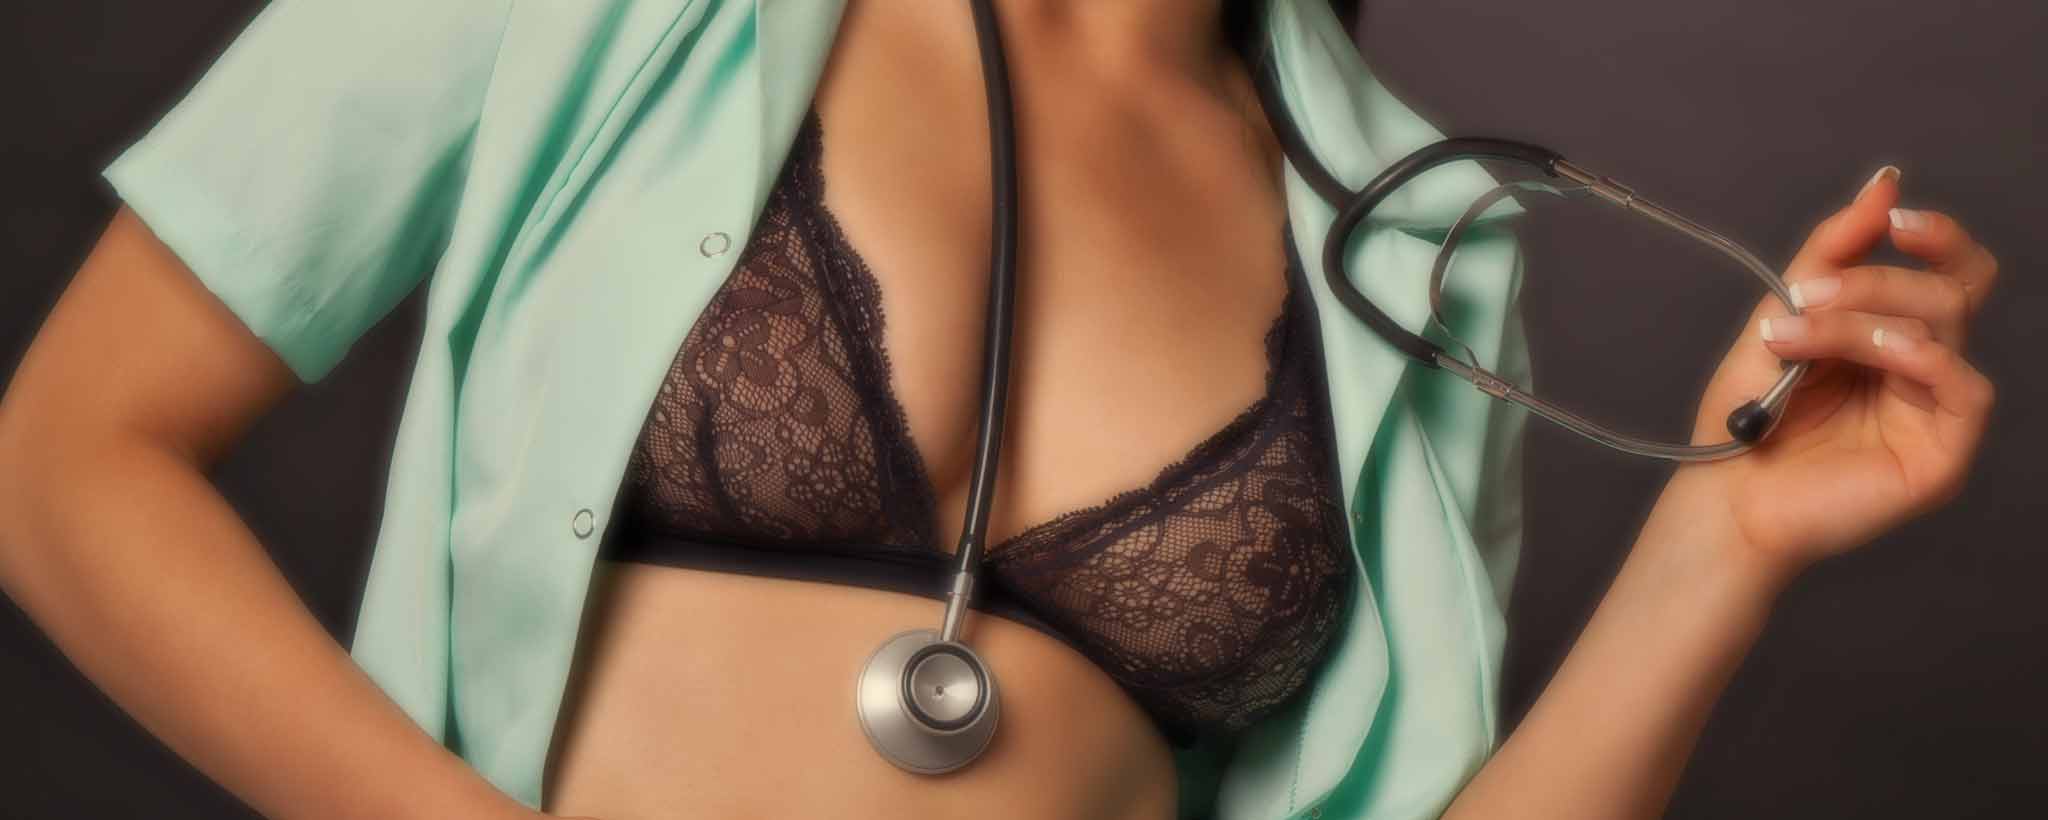 'Female sexy doctor brassiere'